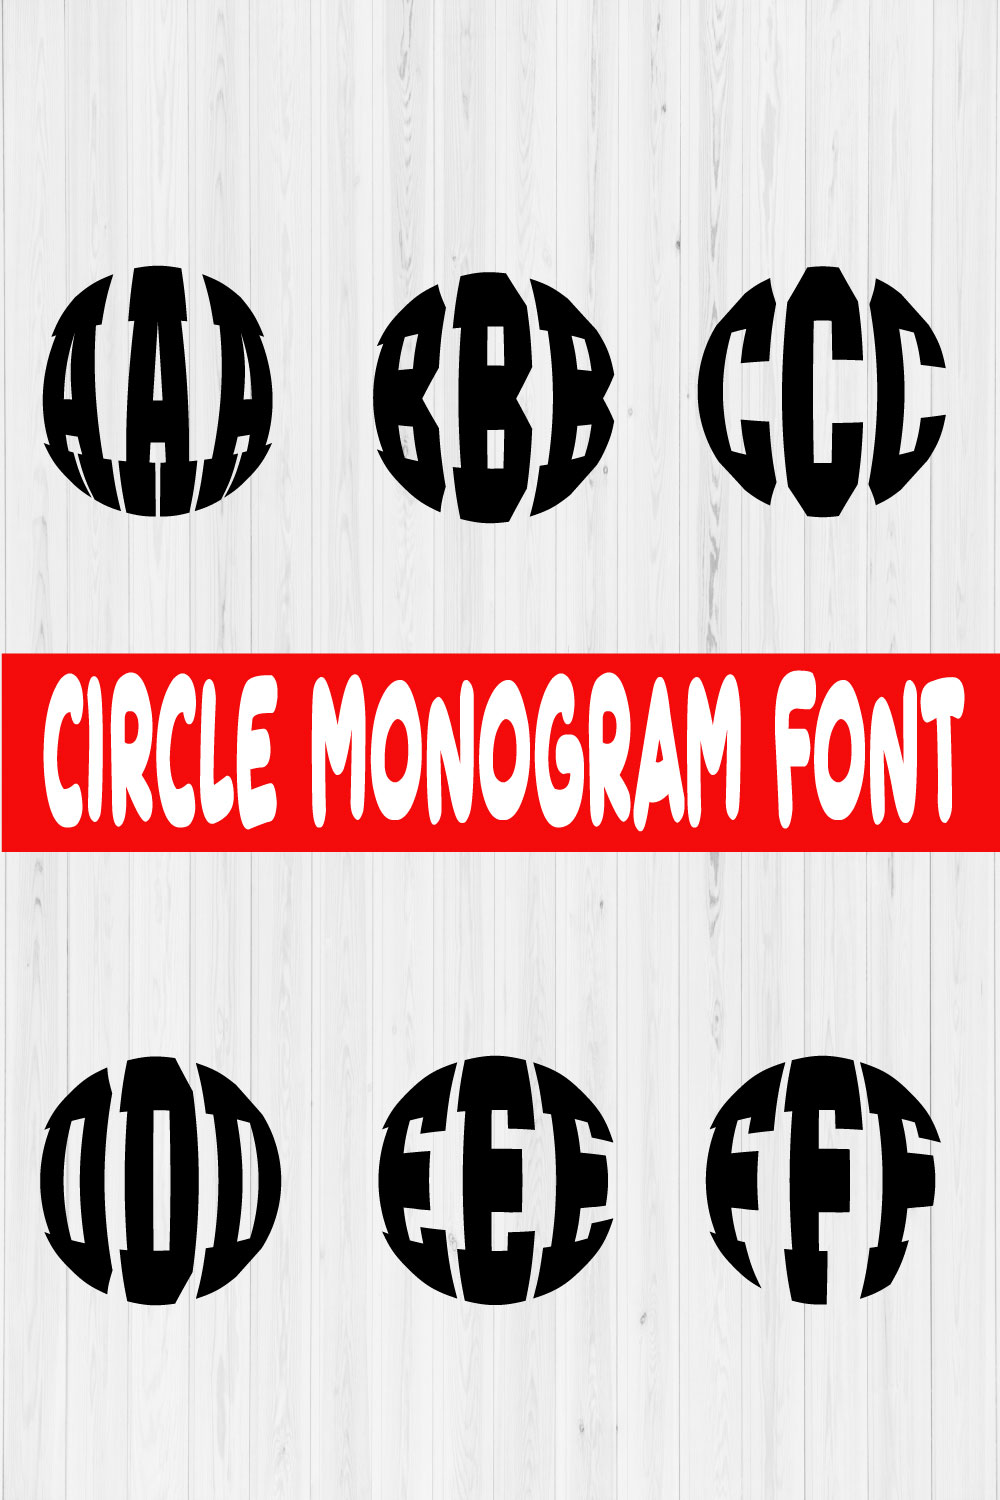 Circle Monogram Font Vol1 pinterest preview image.